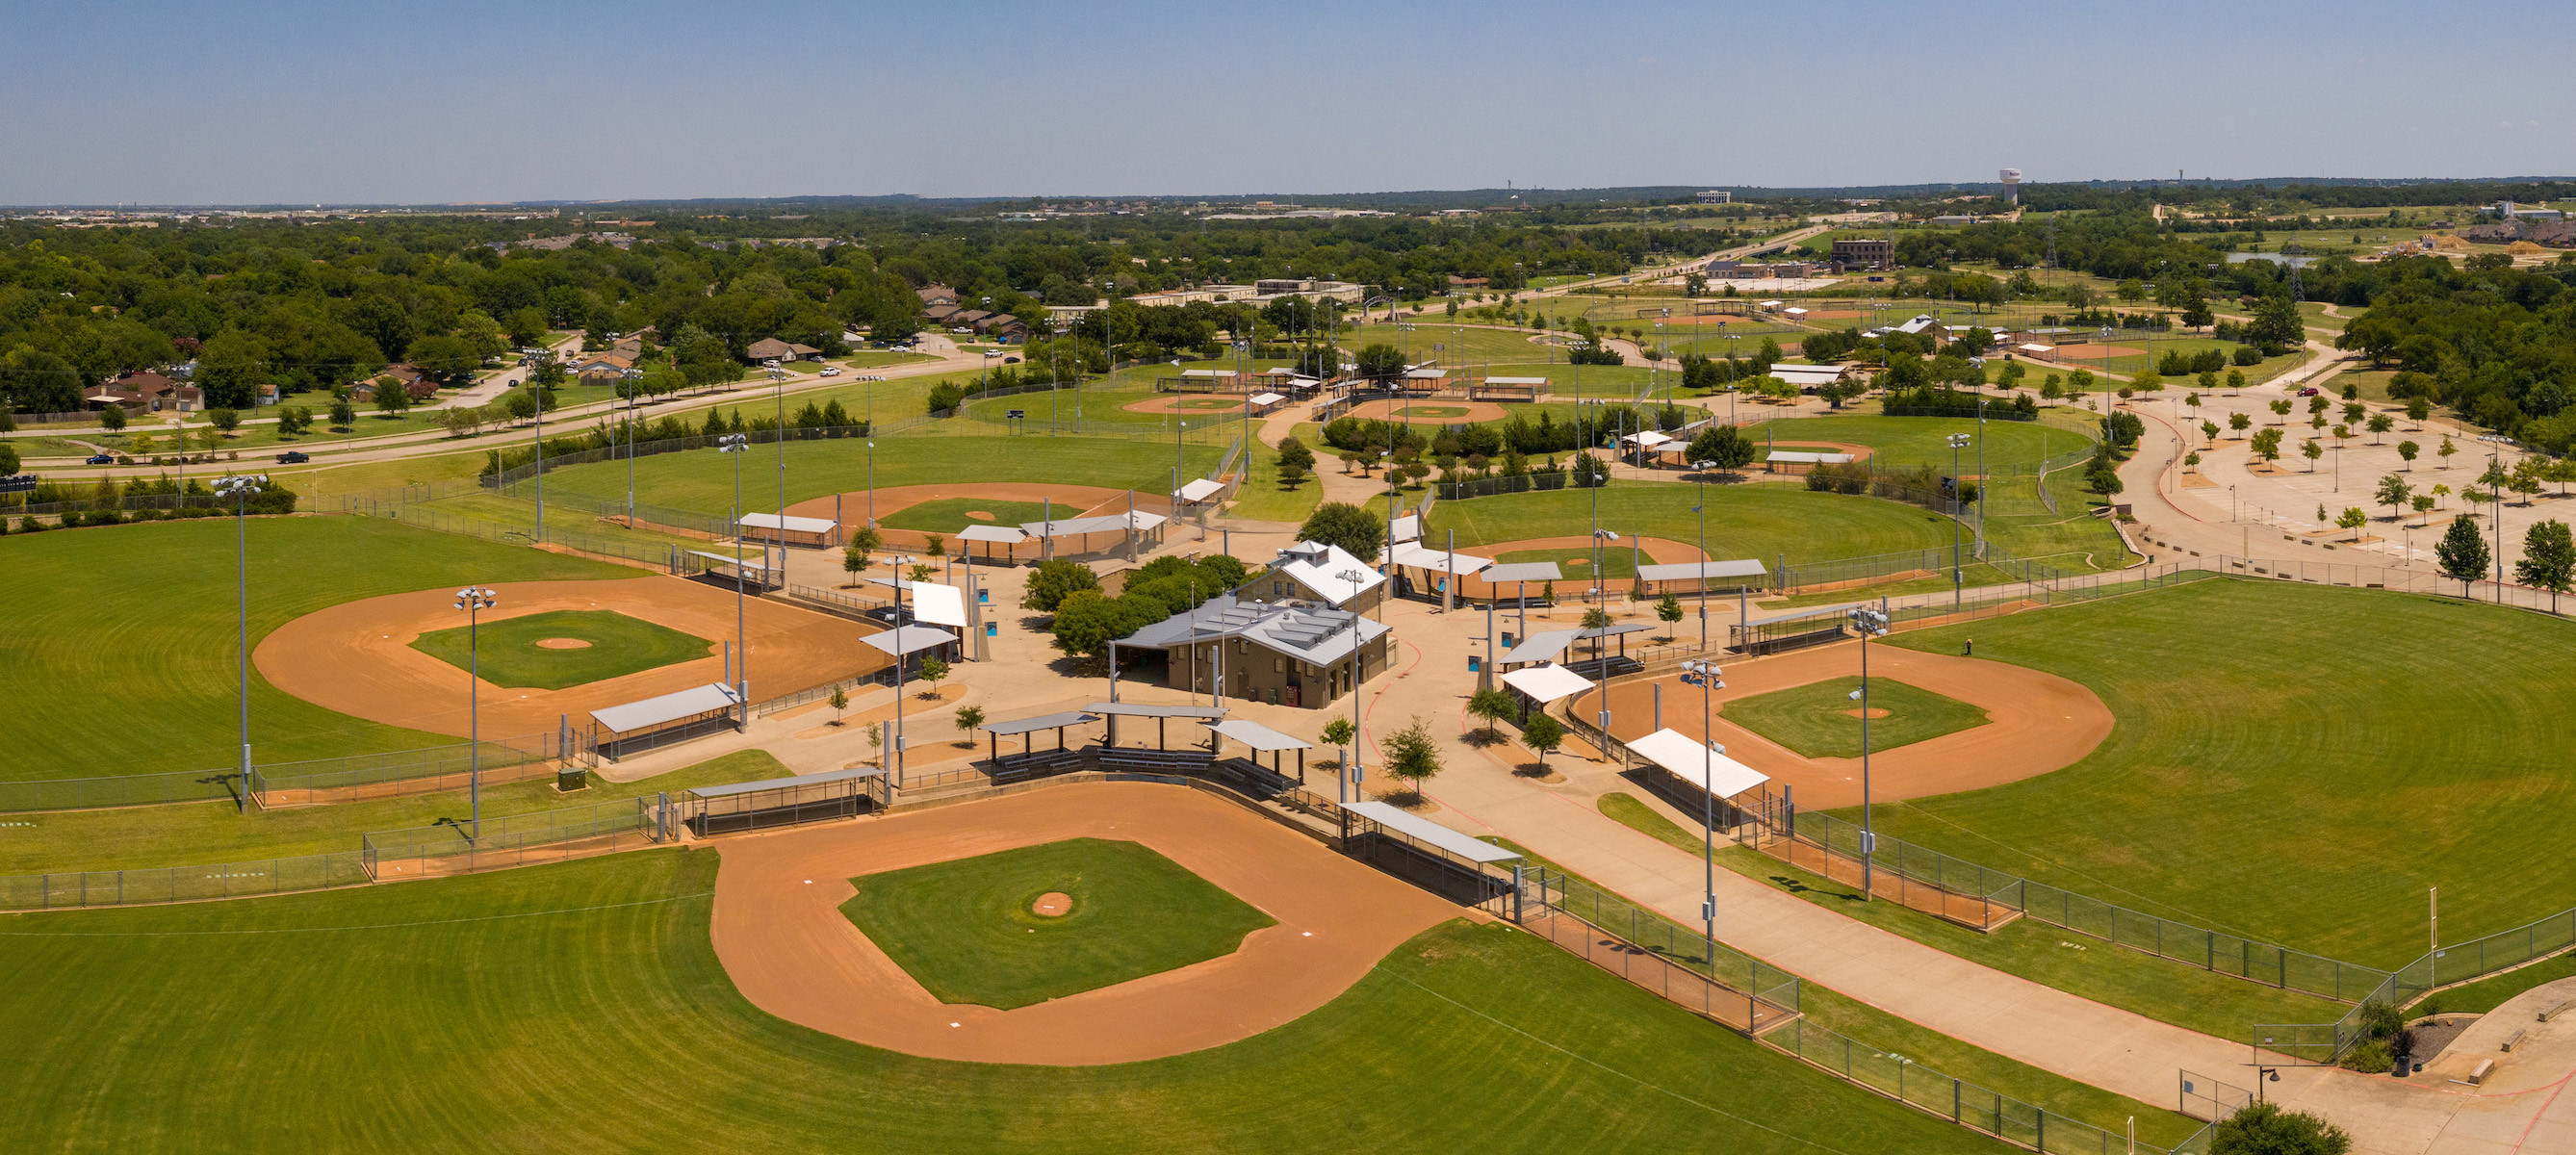 Sky view of baseball fields